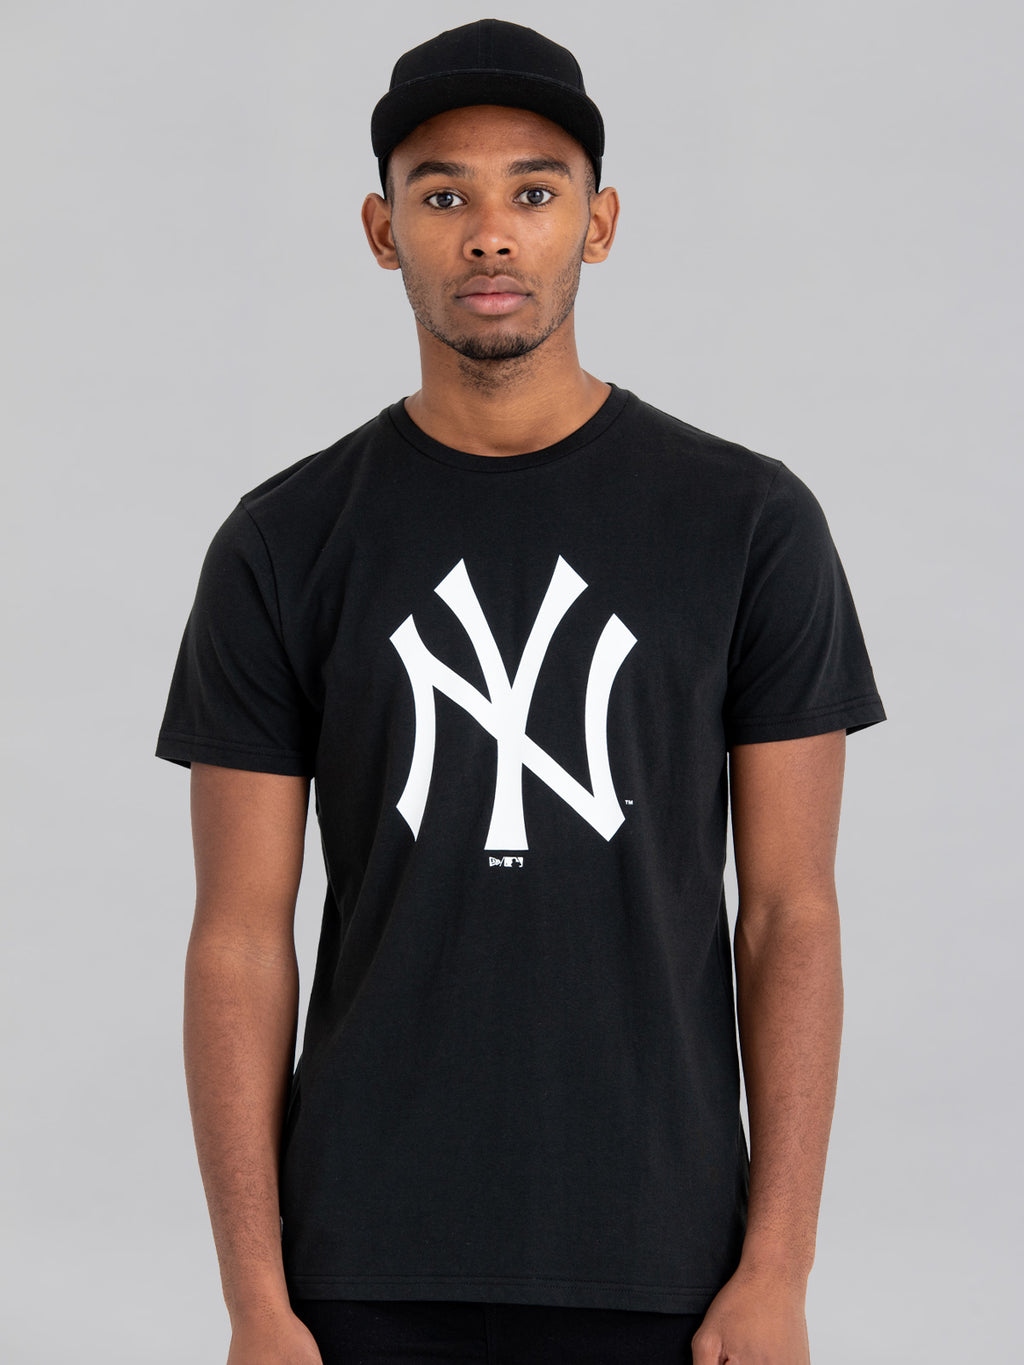 Boys New York Yankee Baseball T Shirt Black Short Sleeve Size Med B VGC